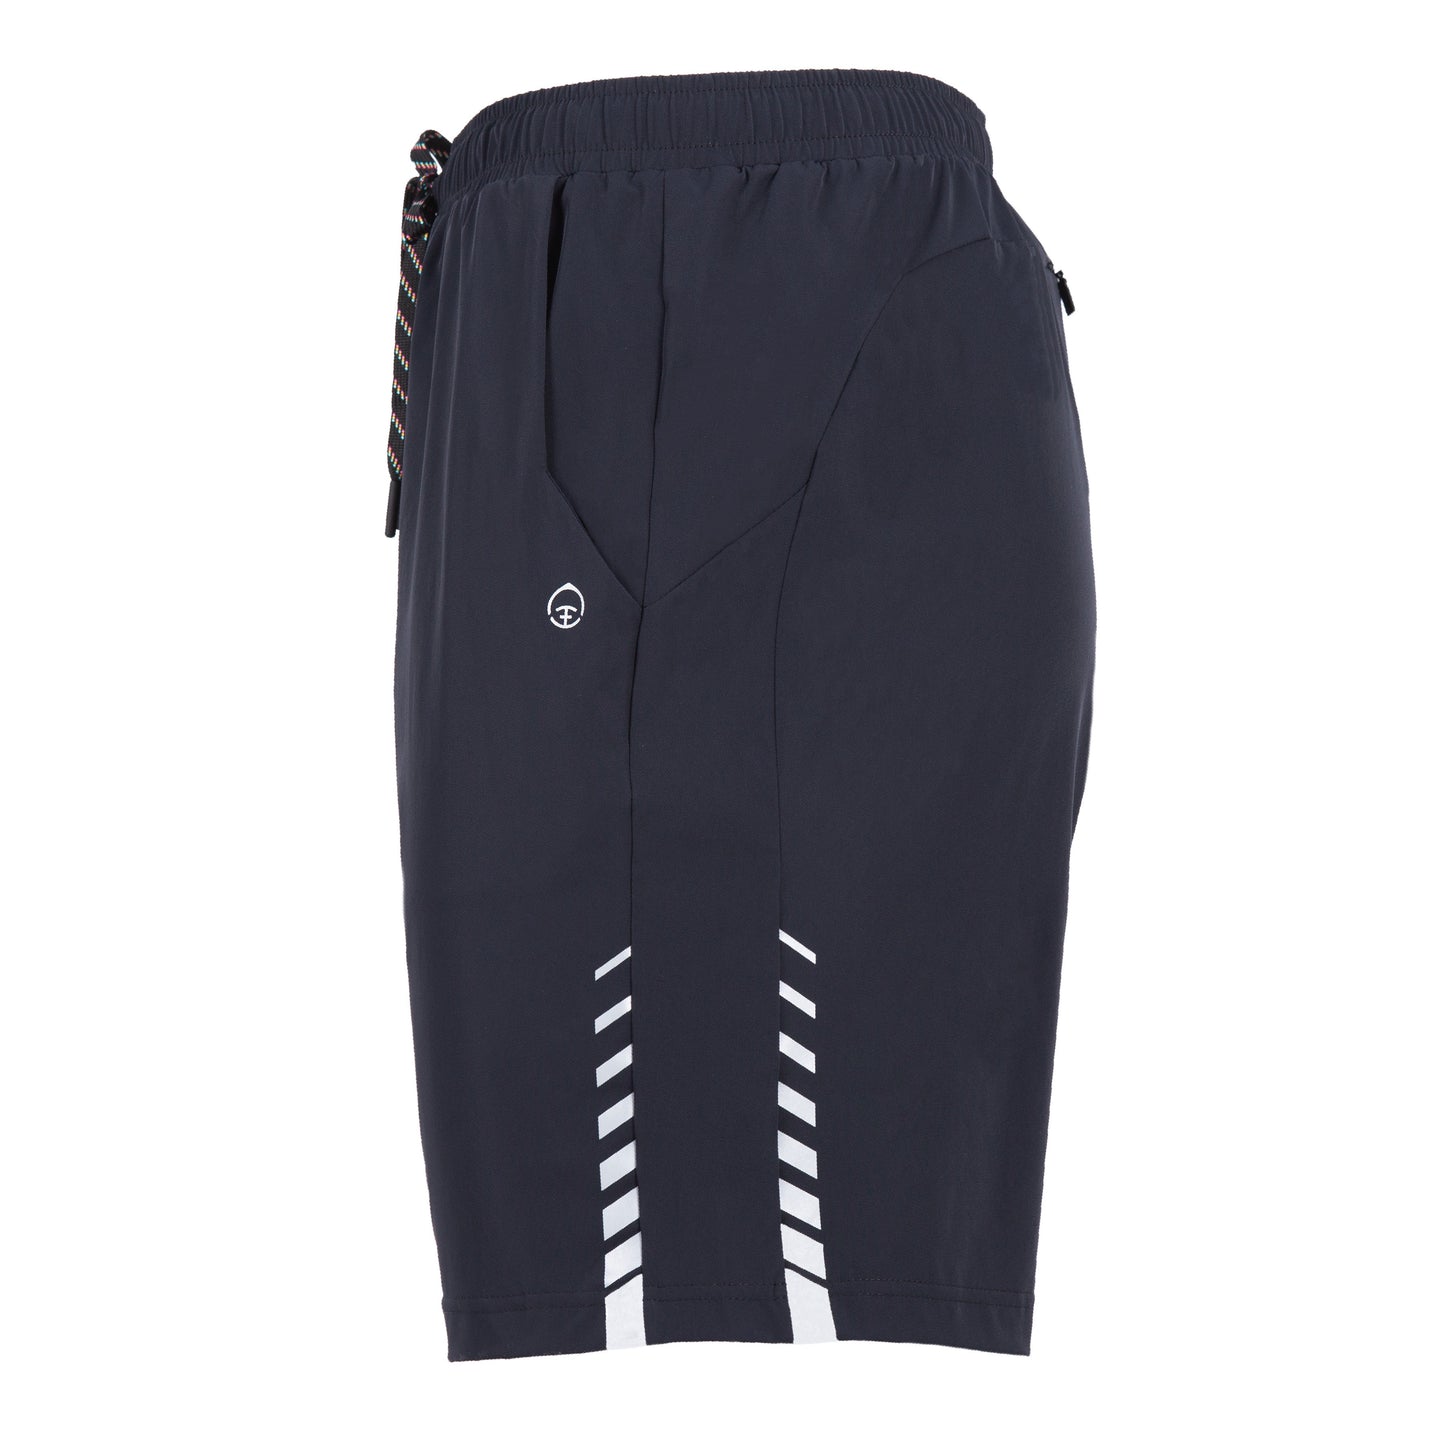 Men's Apex Sport Shorts - Black